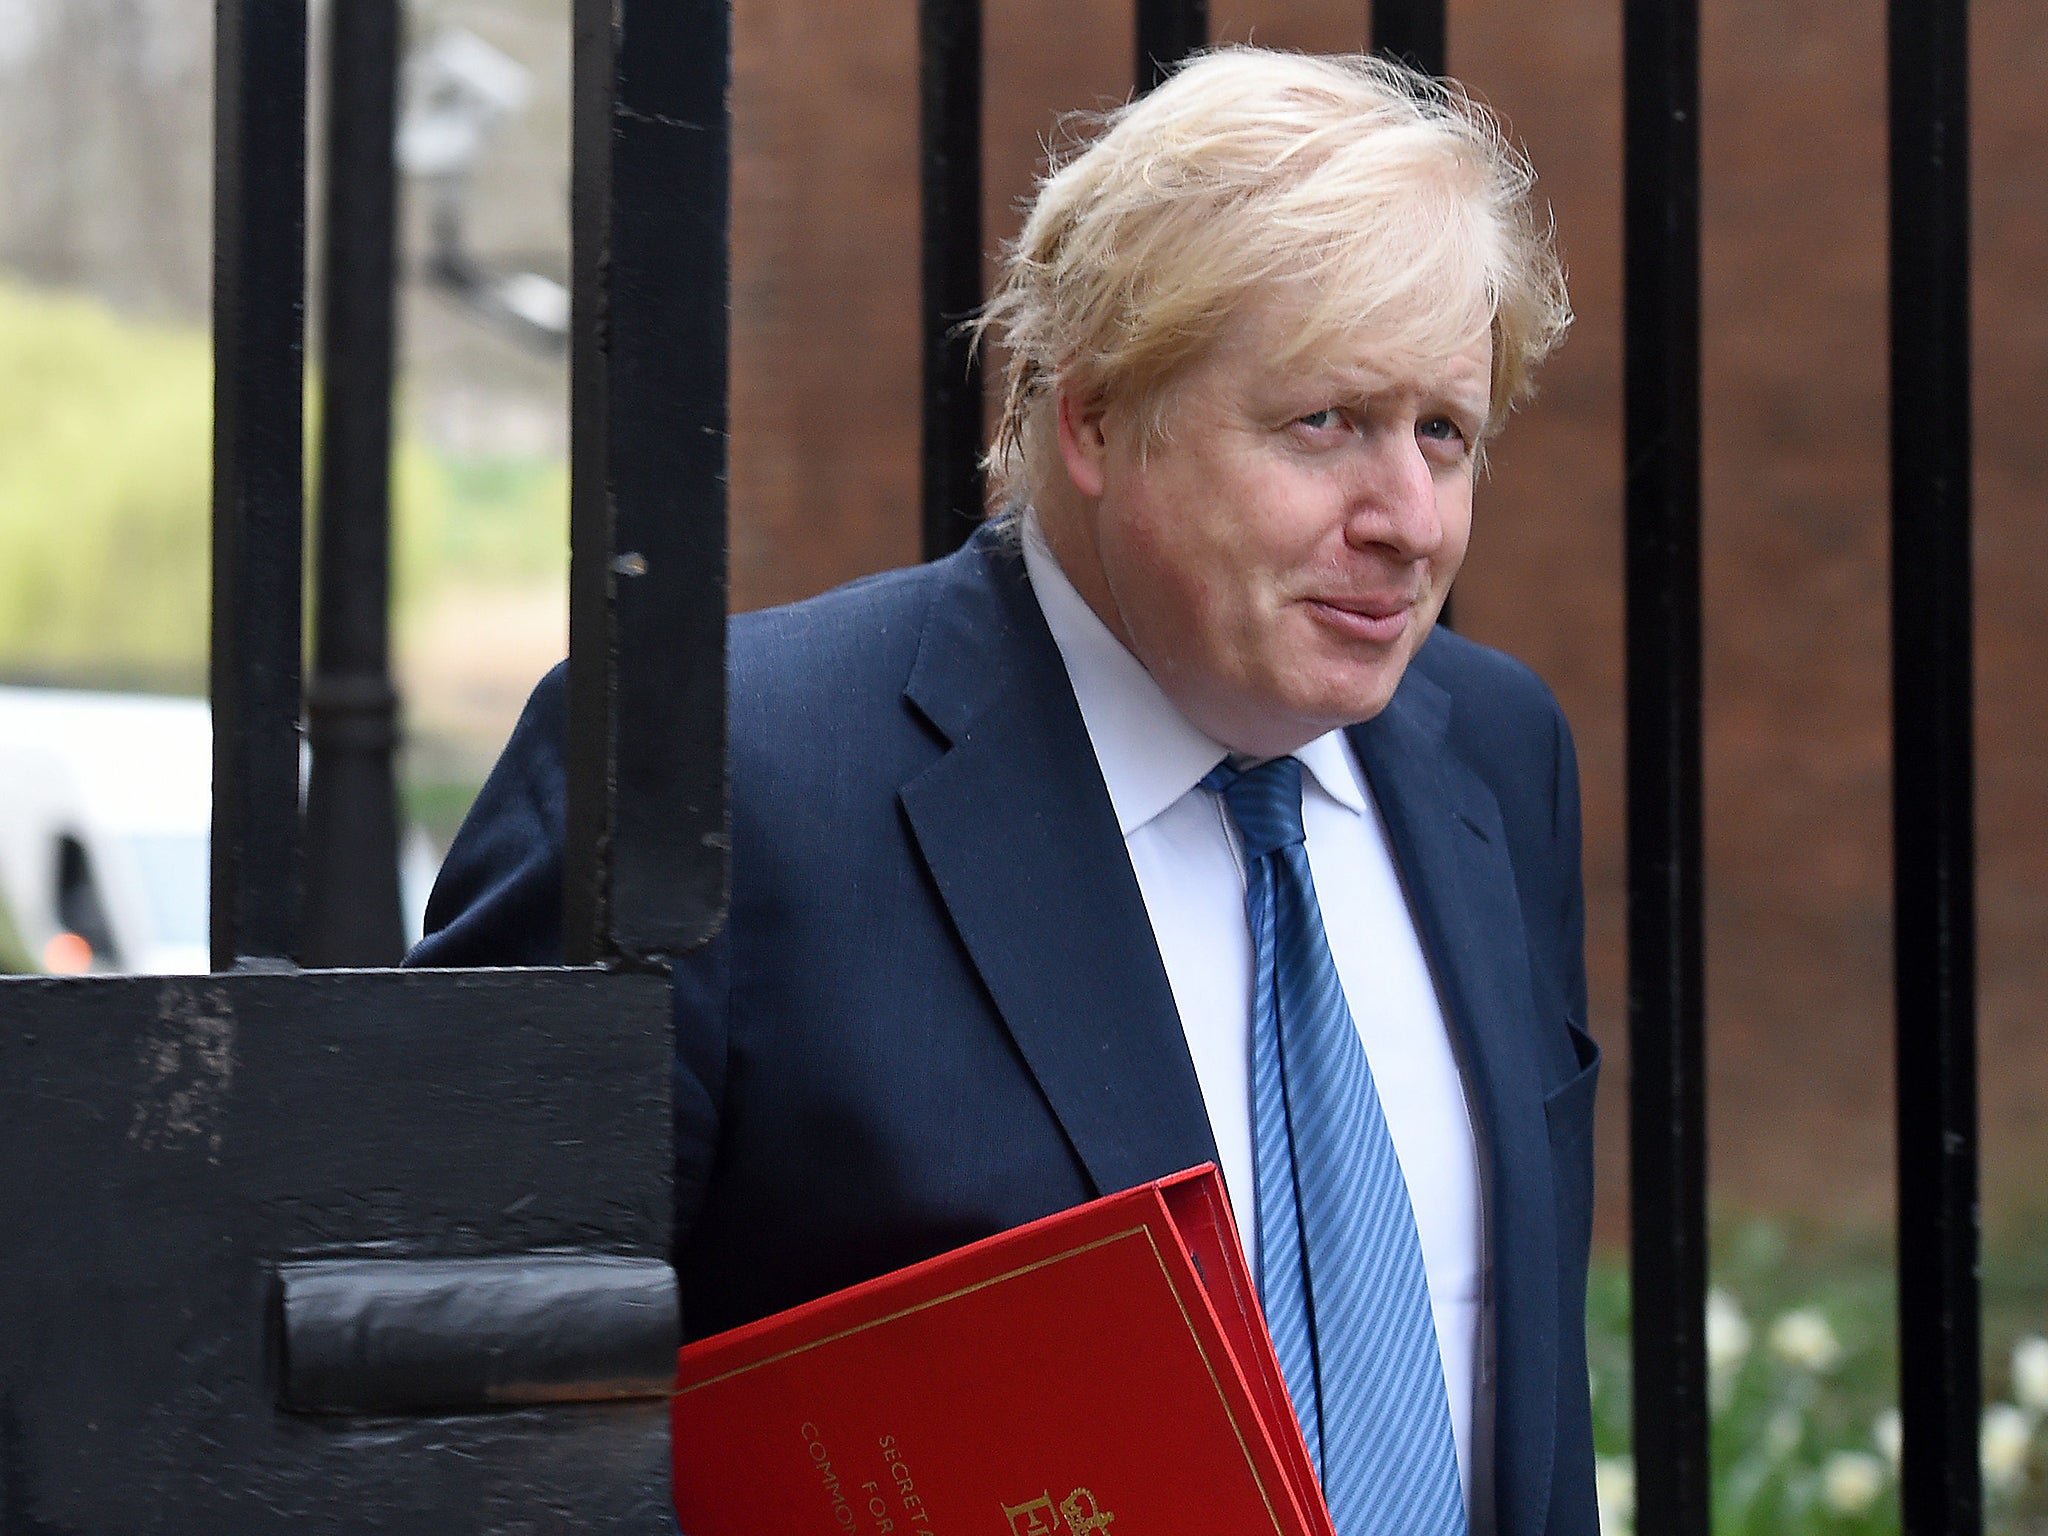 Foreign Secretary Boris Johnson will travel to Washington DC and New York City